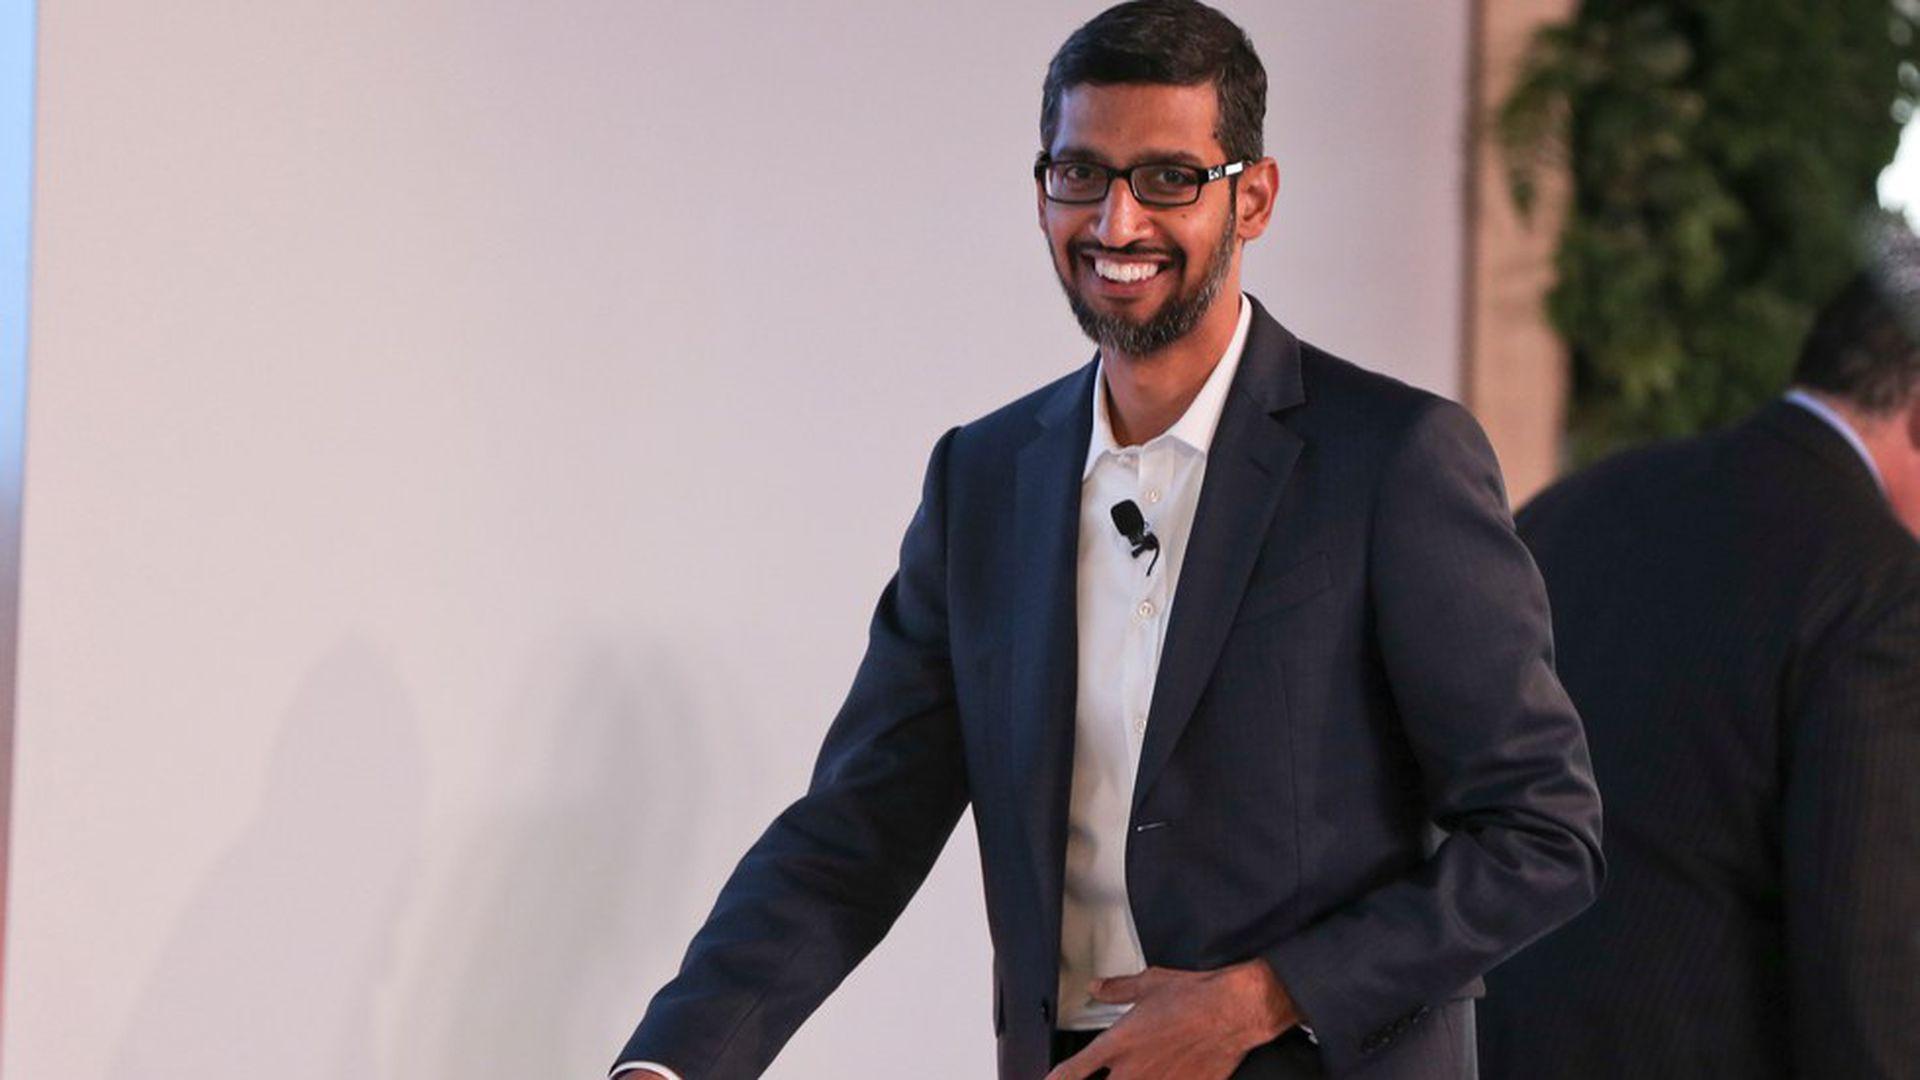 Google CEO under pressure to fix Google's problems